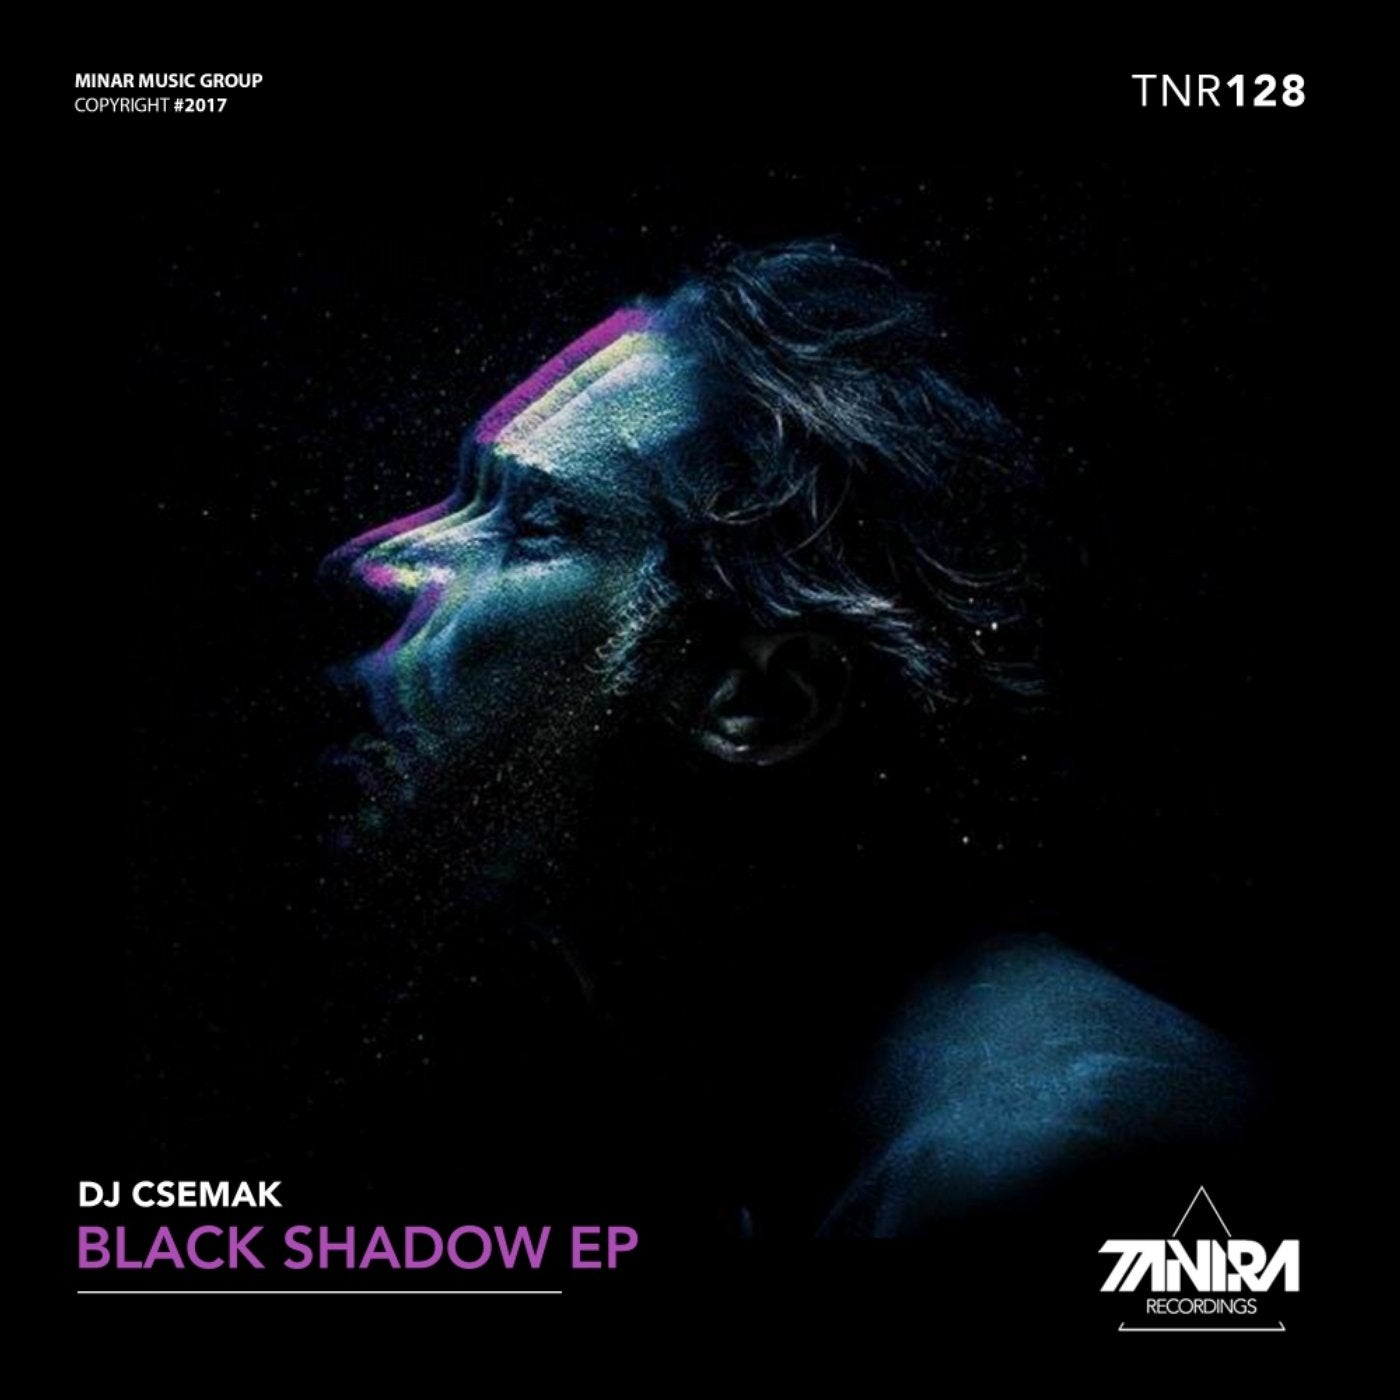 Black Shadow EP